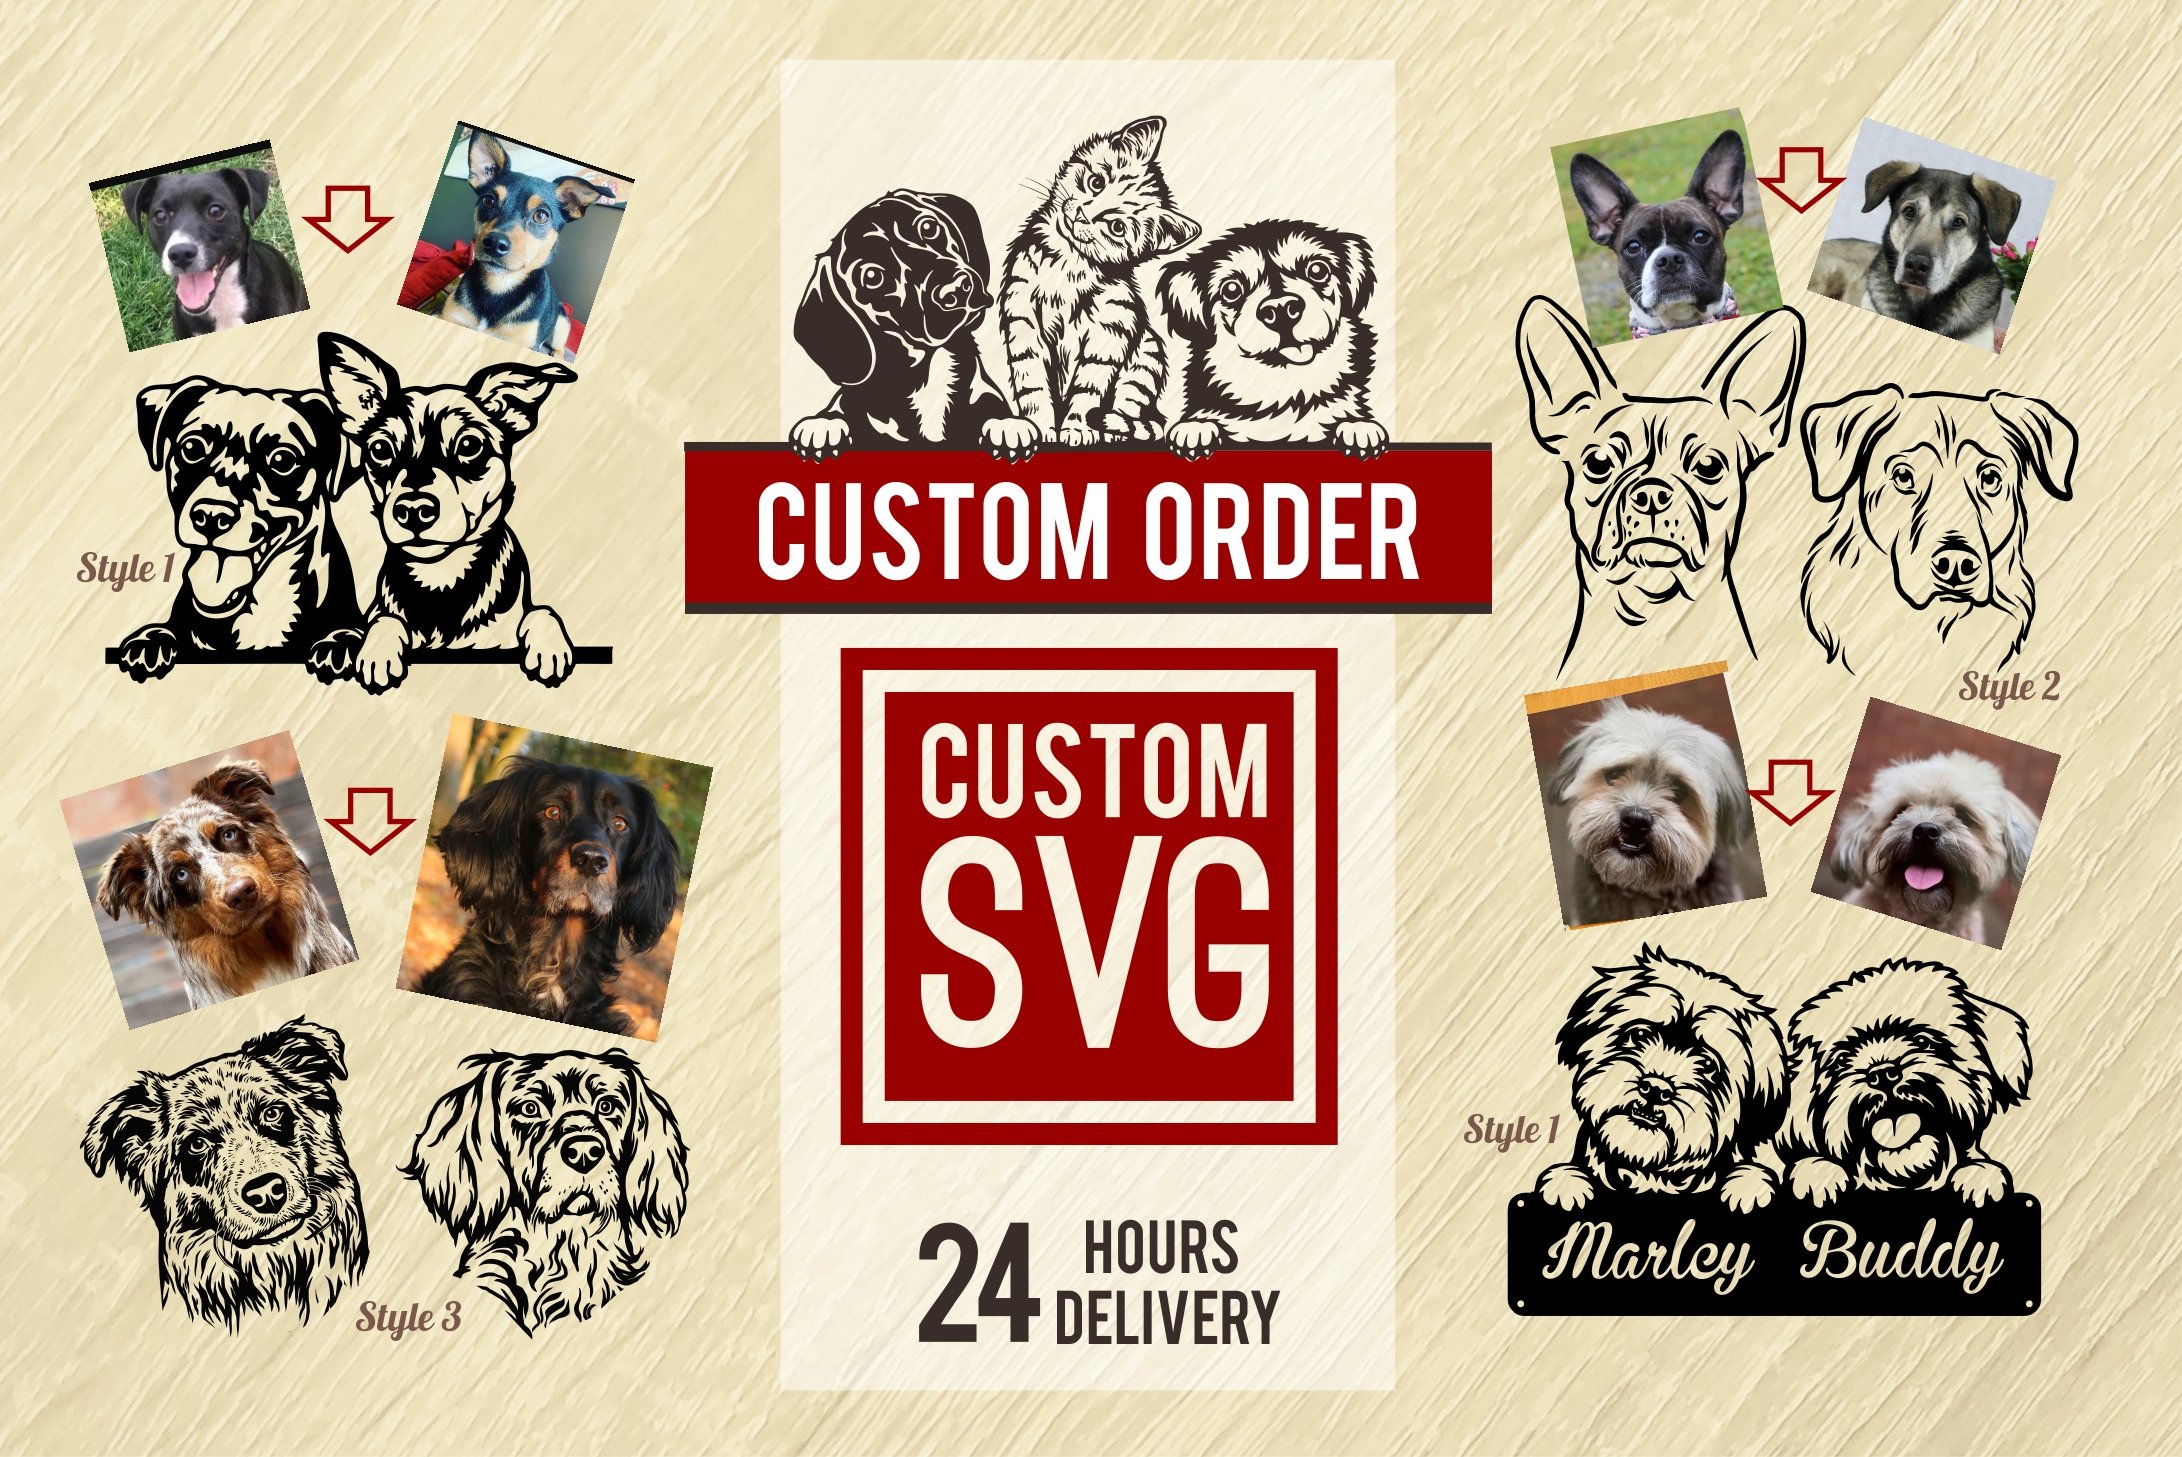 pets custom order service 28429 672